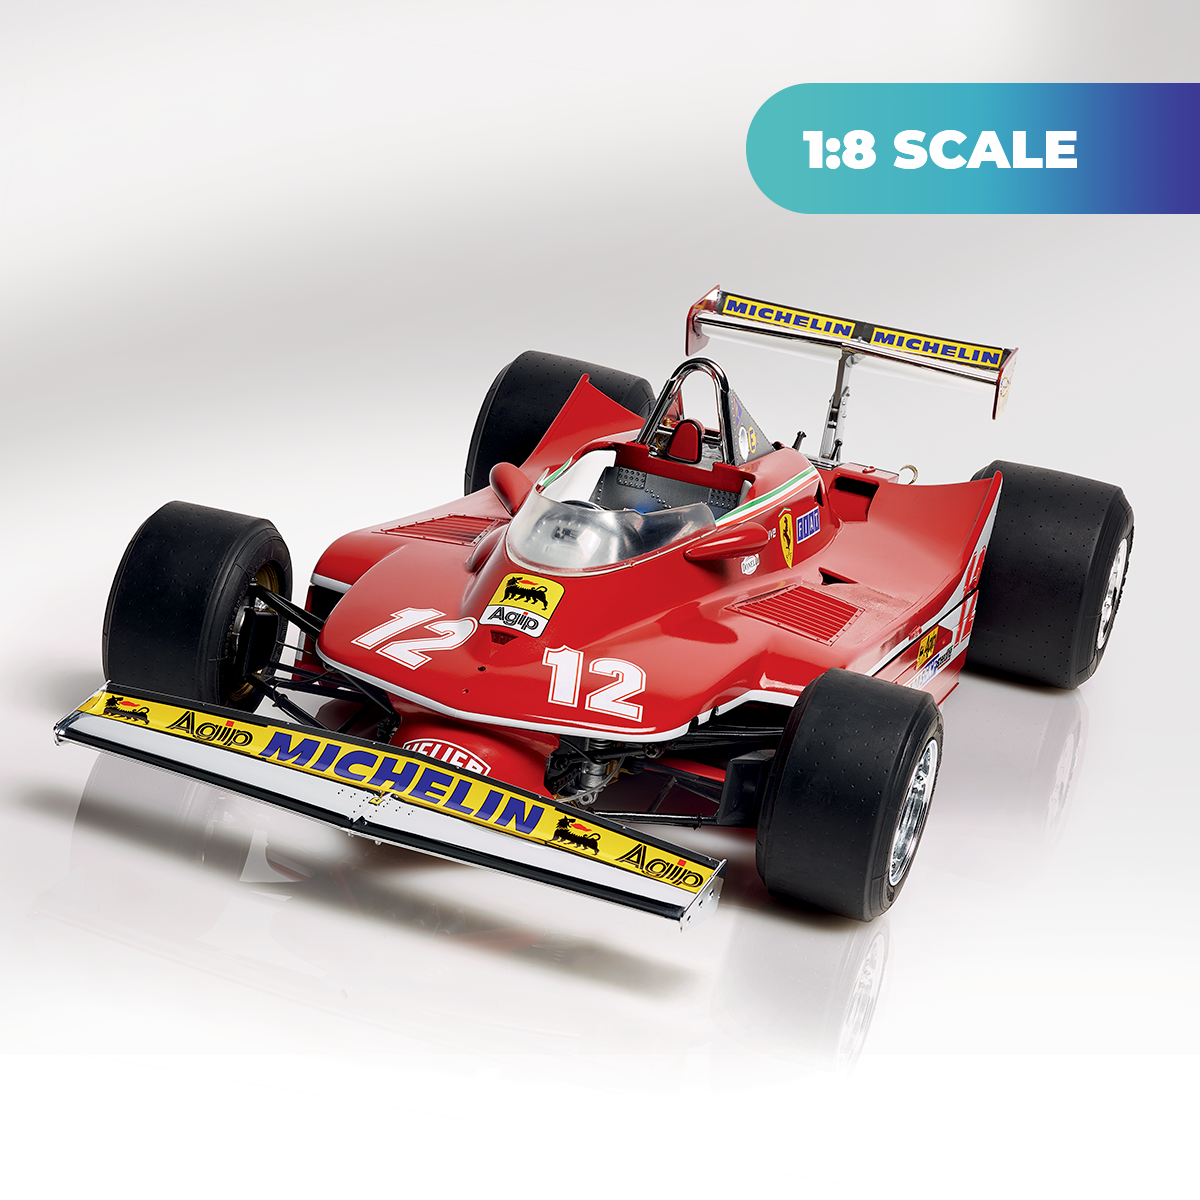 Ferrari 312T4 - 1:8 scale model kit, Agora Models